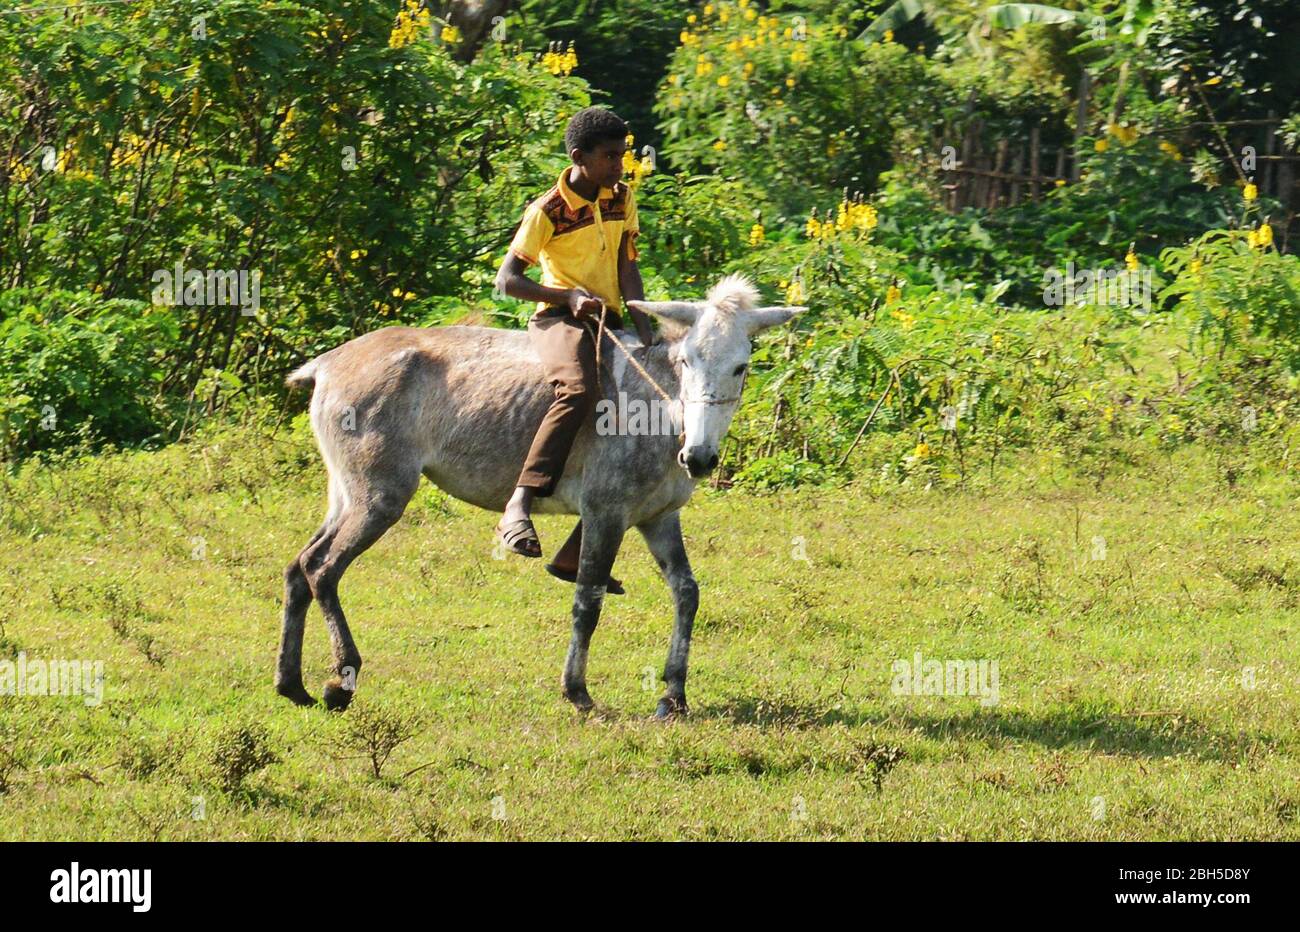 An Ethiopian boy riding his horse in the Kaffa region of Ethiopia. Stock Photo